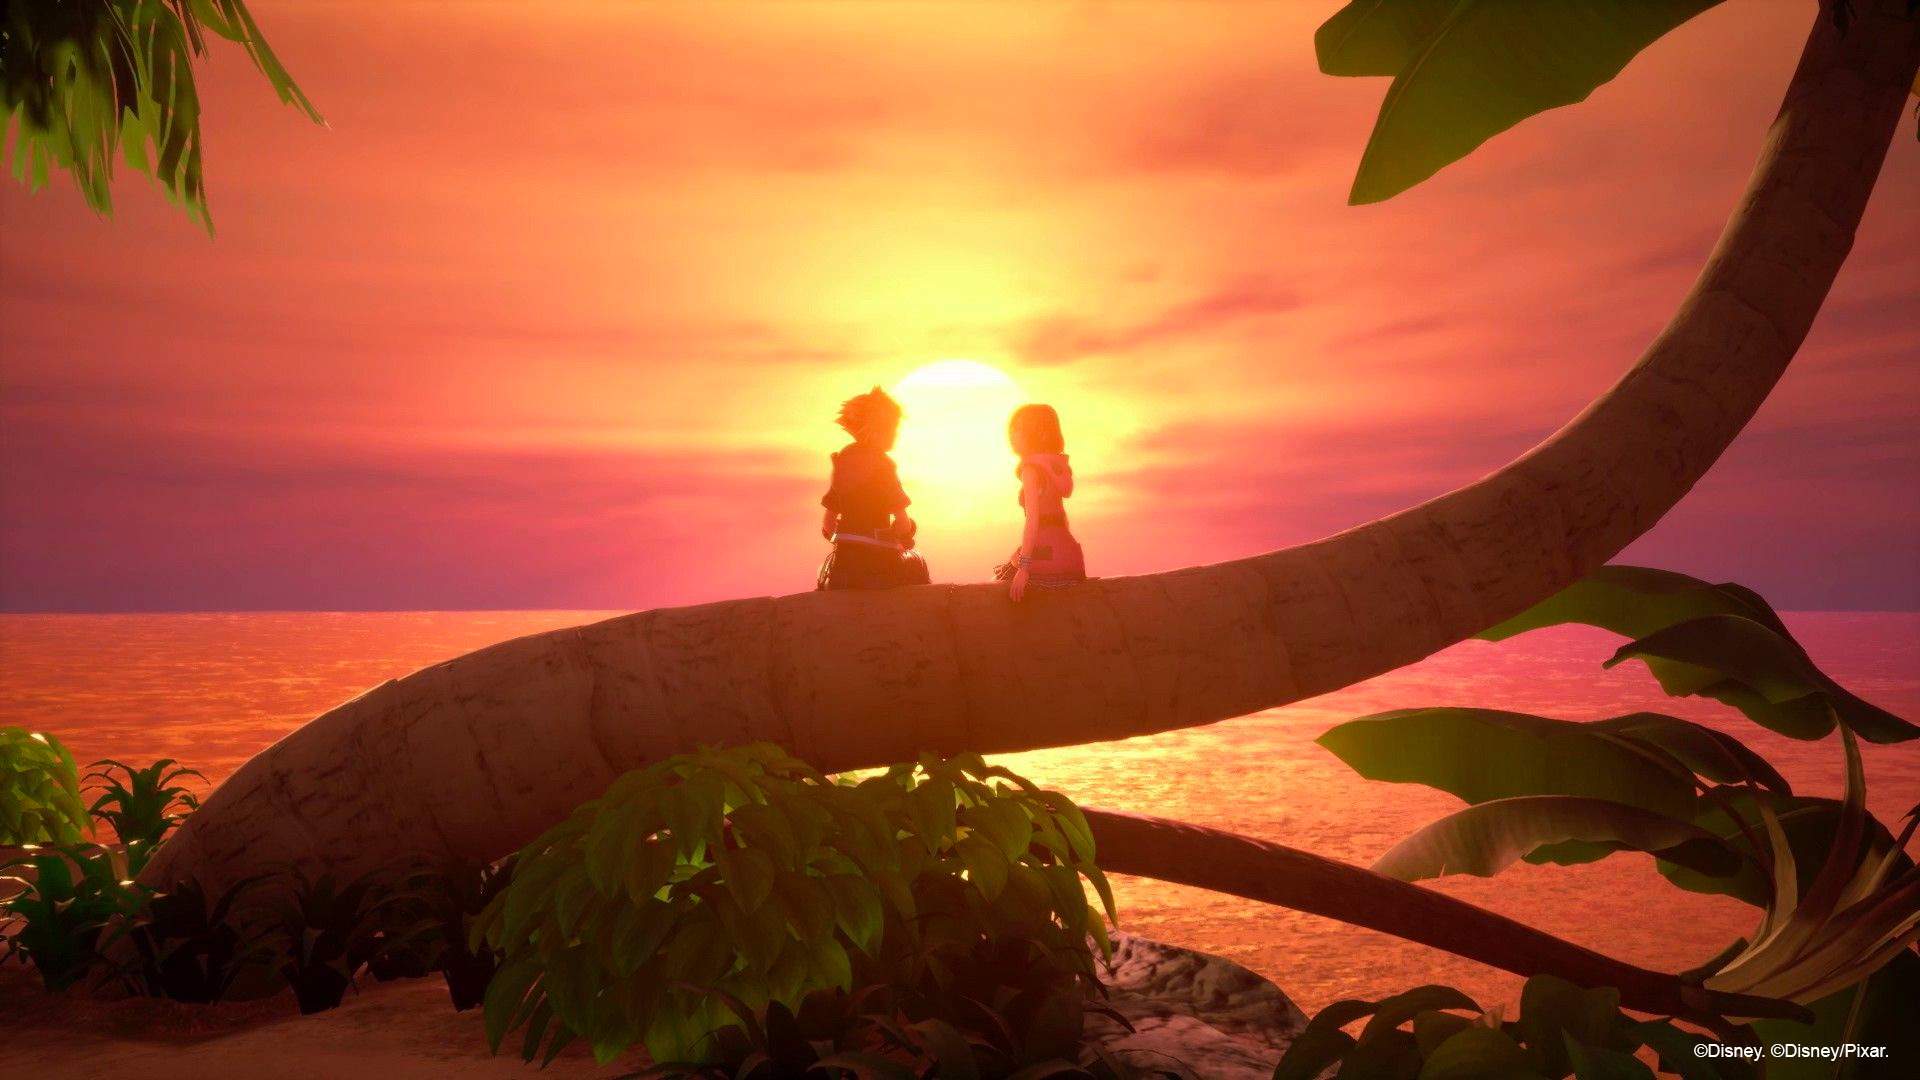 Sora and Kairi together as the sun sets